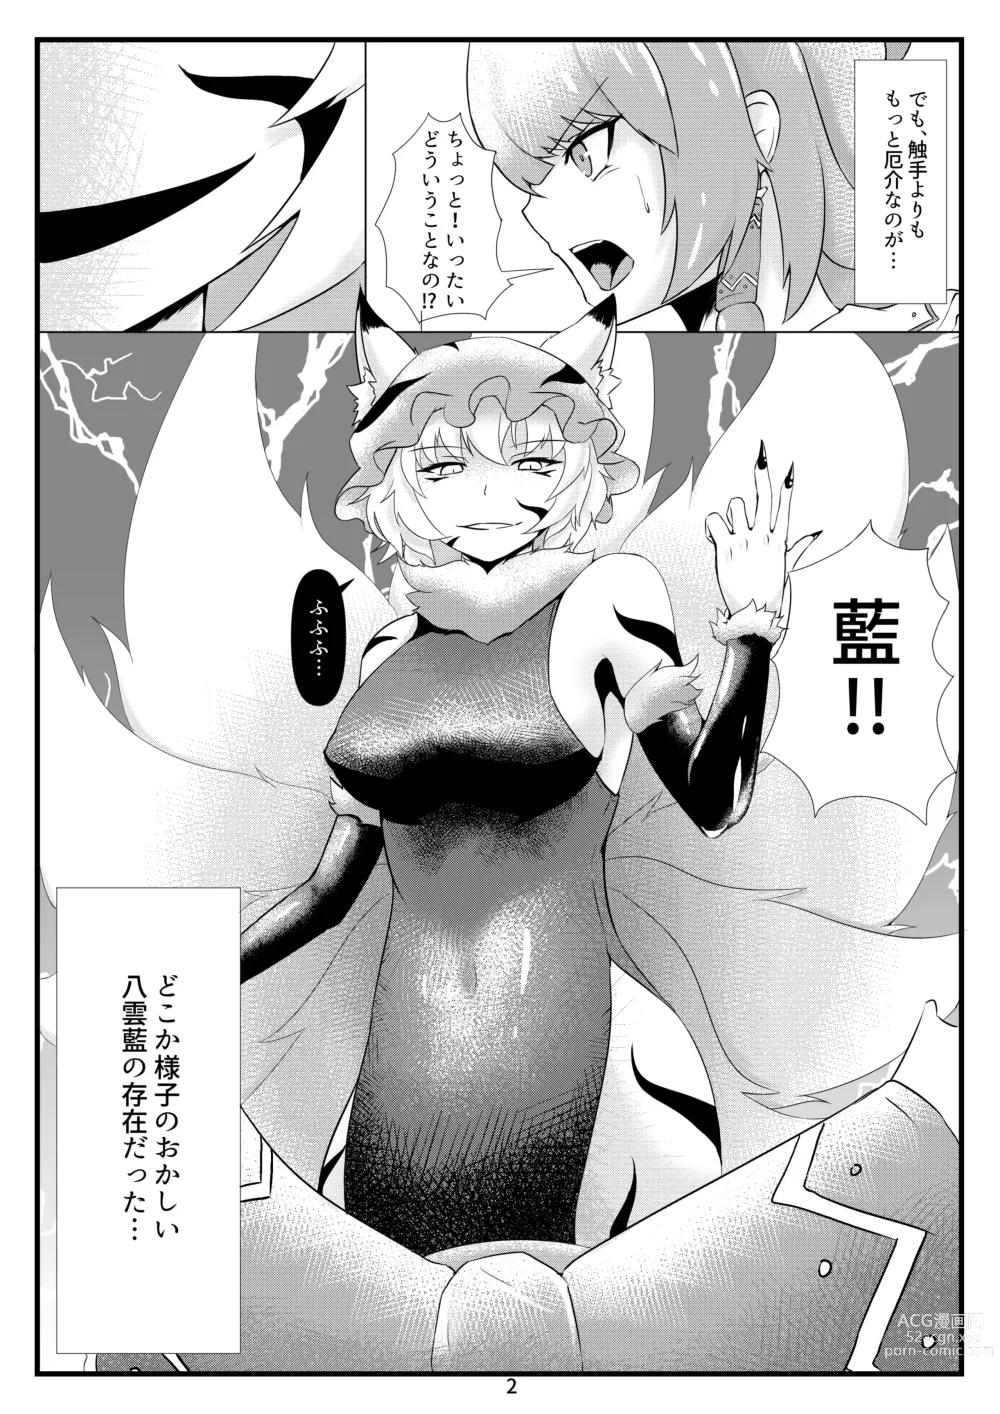 Page 3 of doujinshi Daraku